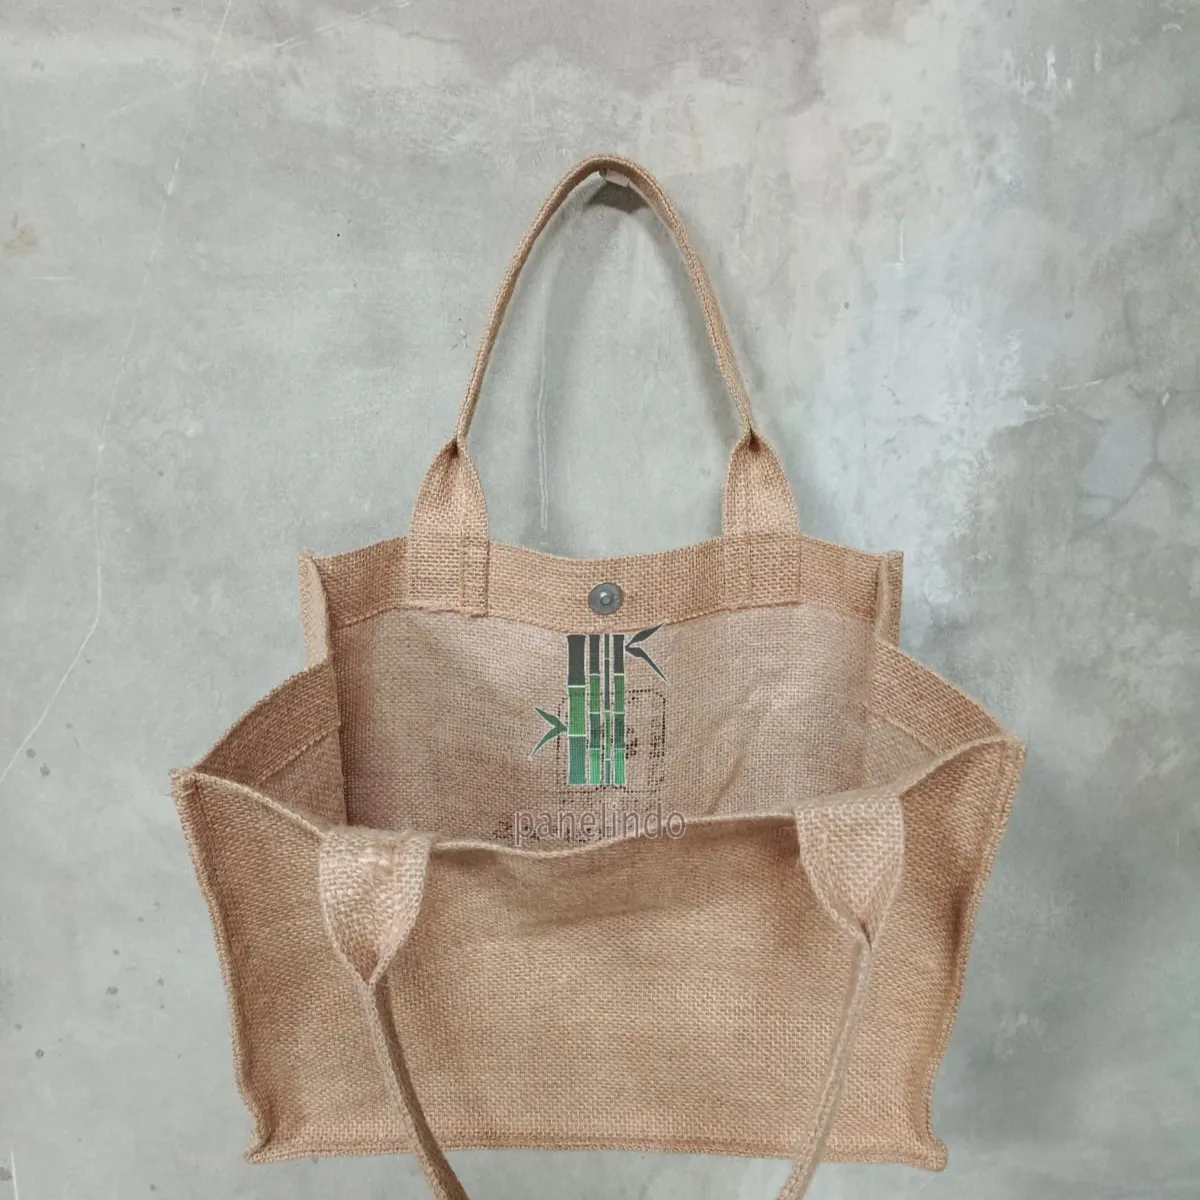 Gunny Bag Shopping Lifestyle umwelt freundliche Recycling gebrauchte Jute